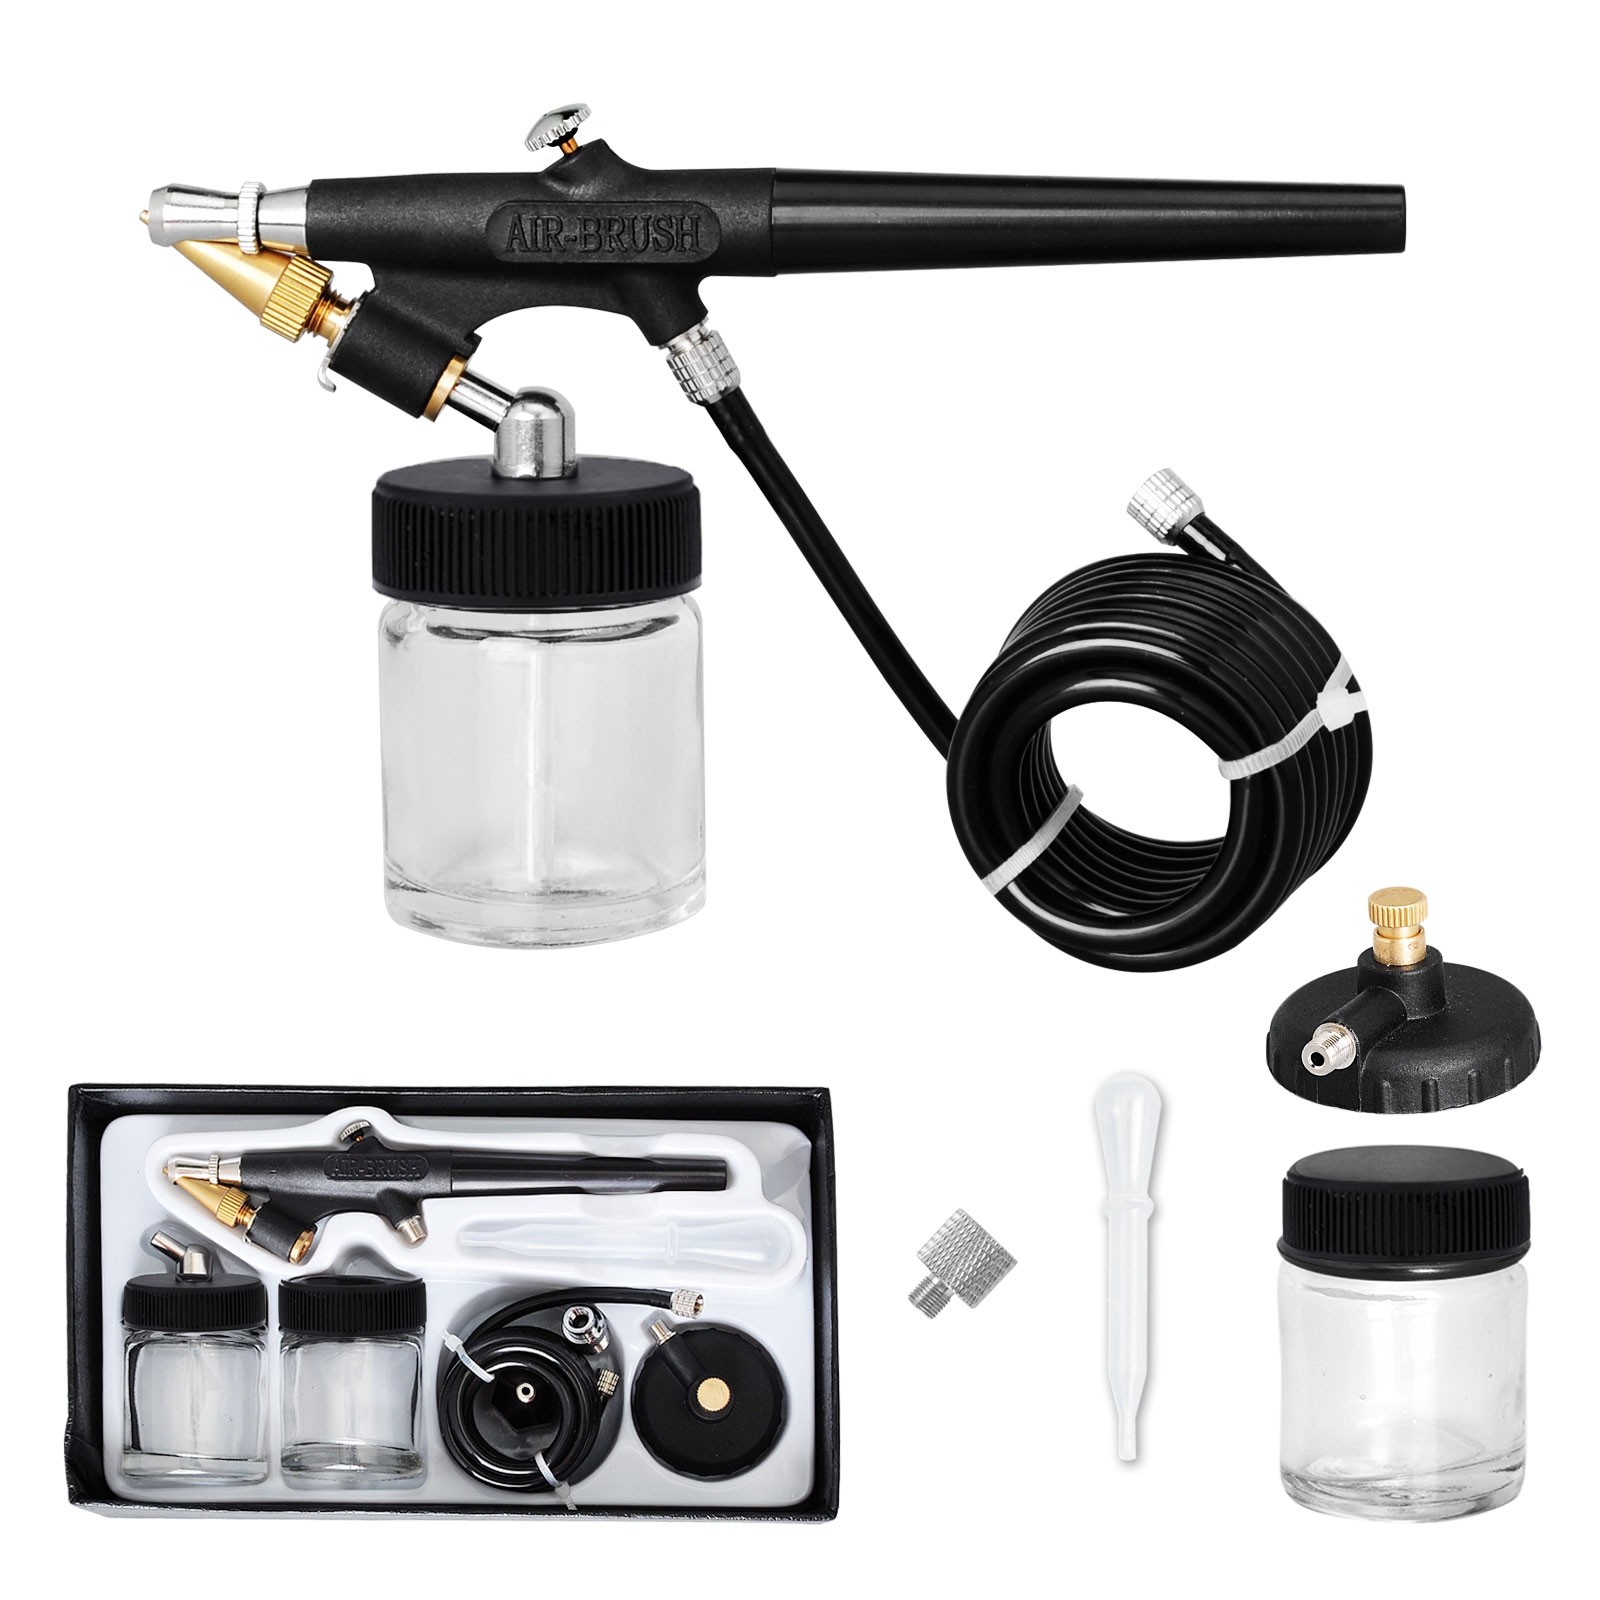  Airbrush  Spray Gun Kit 22cc Ink Cup Hose Single Action Air  